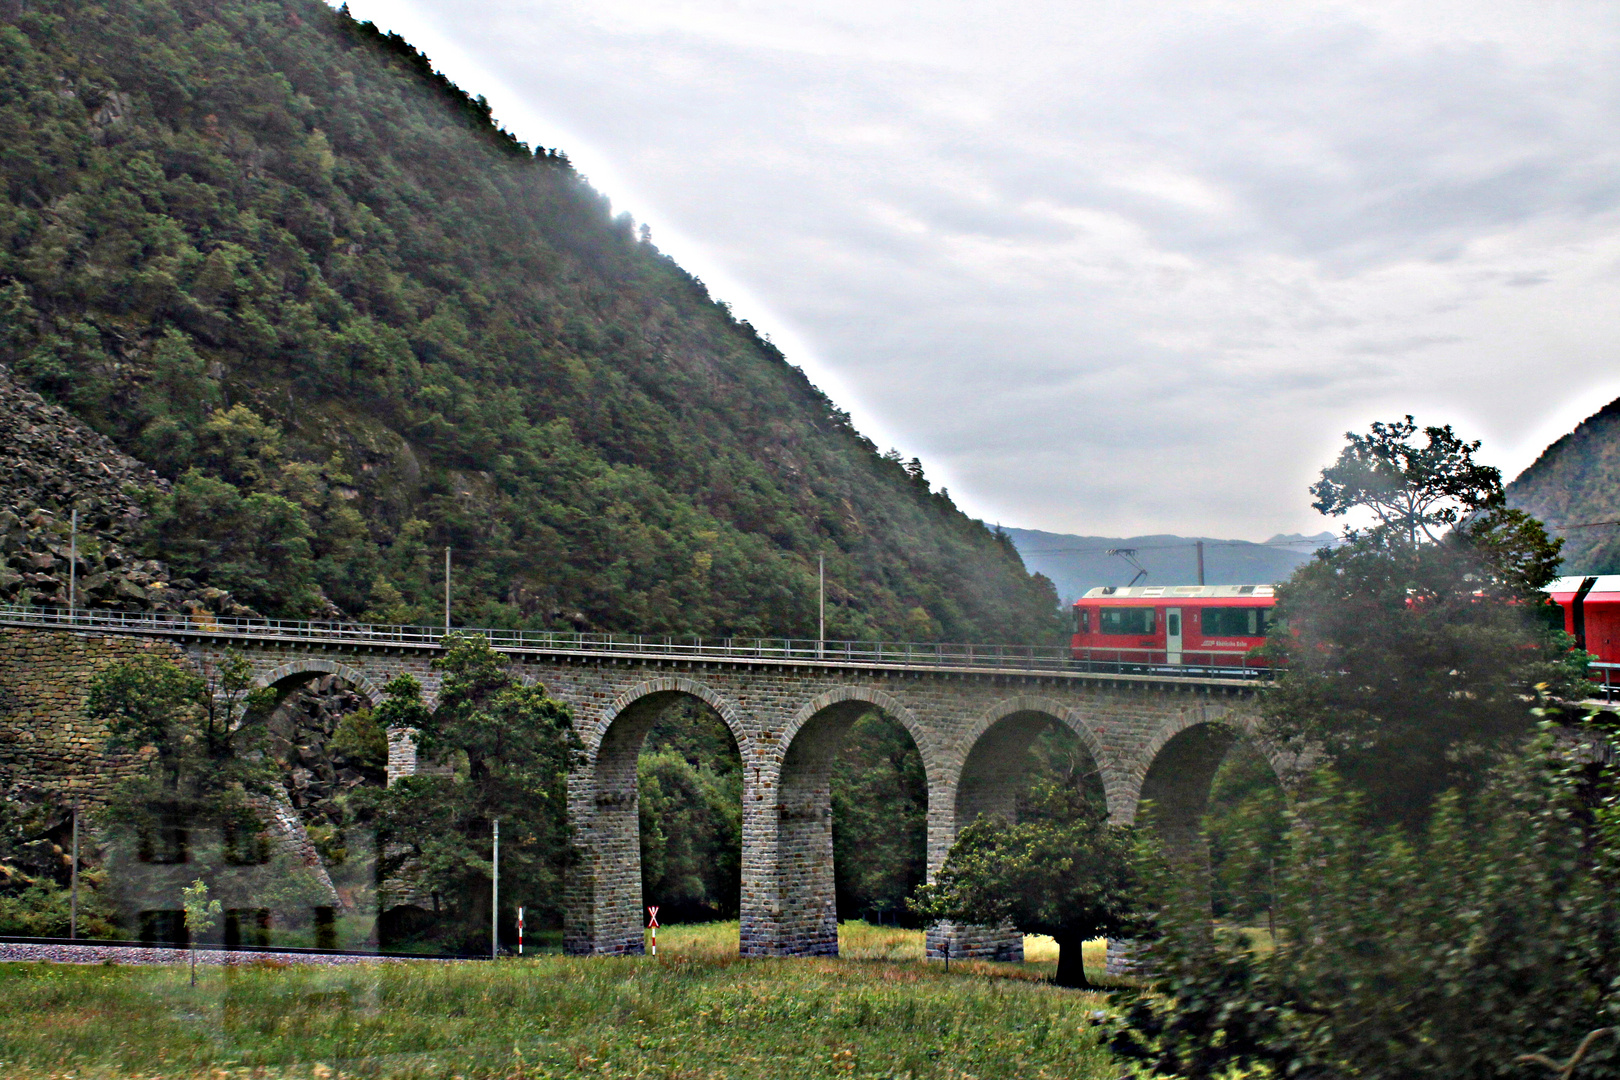 Bermina railway overpass